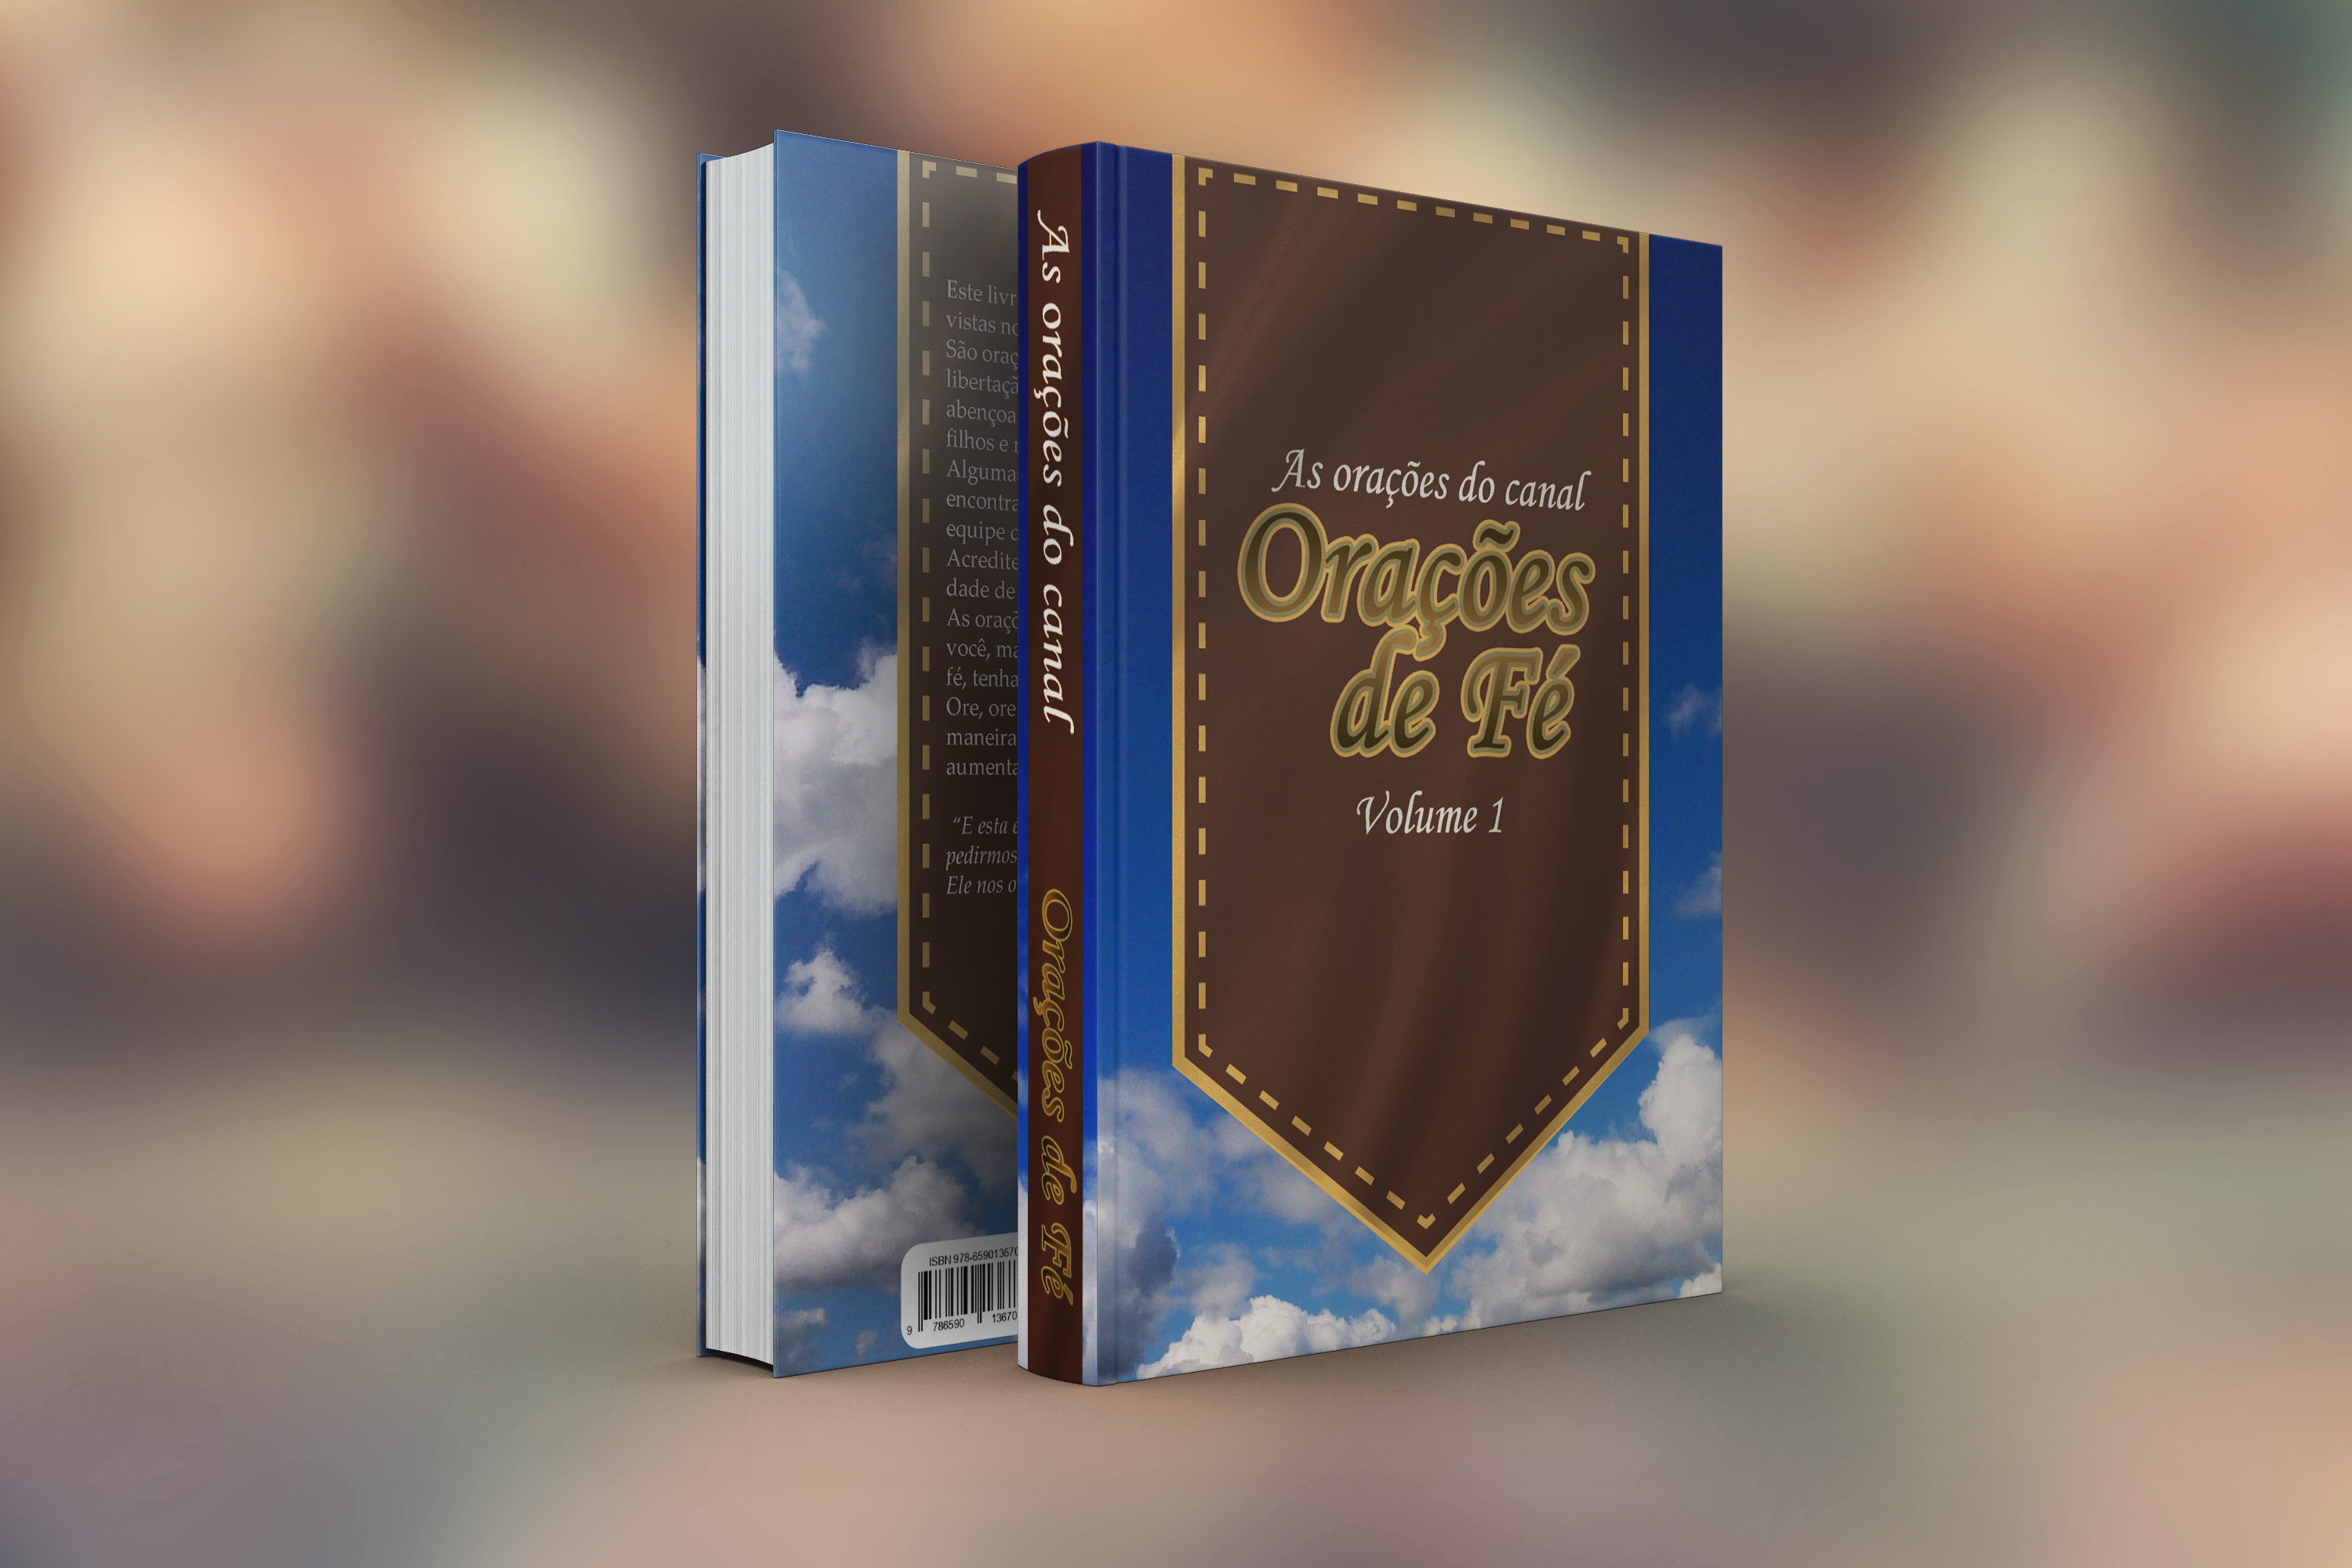 //www.livros.oracoesdefe.com.br/wp-content/uploads/2019/09/Combo4.png